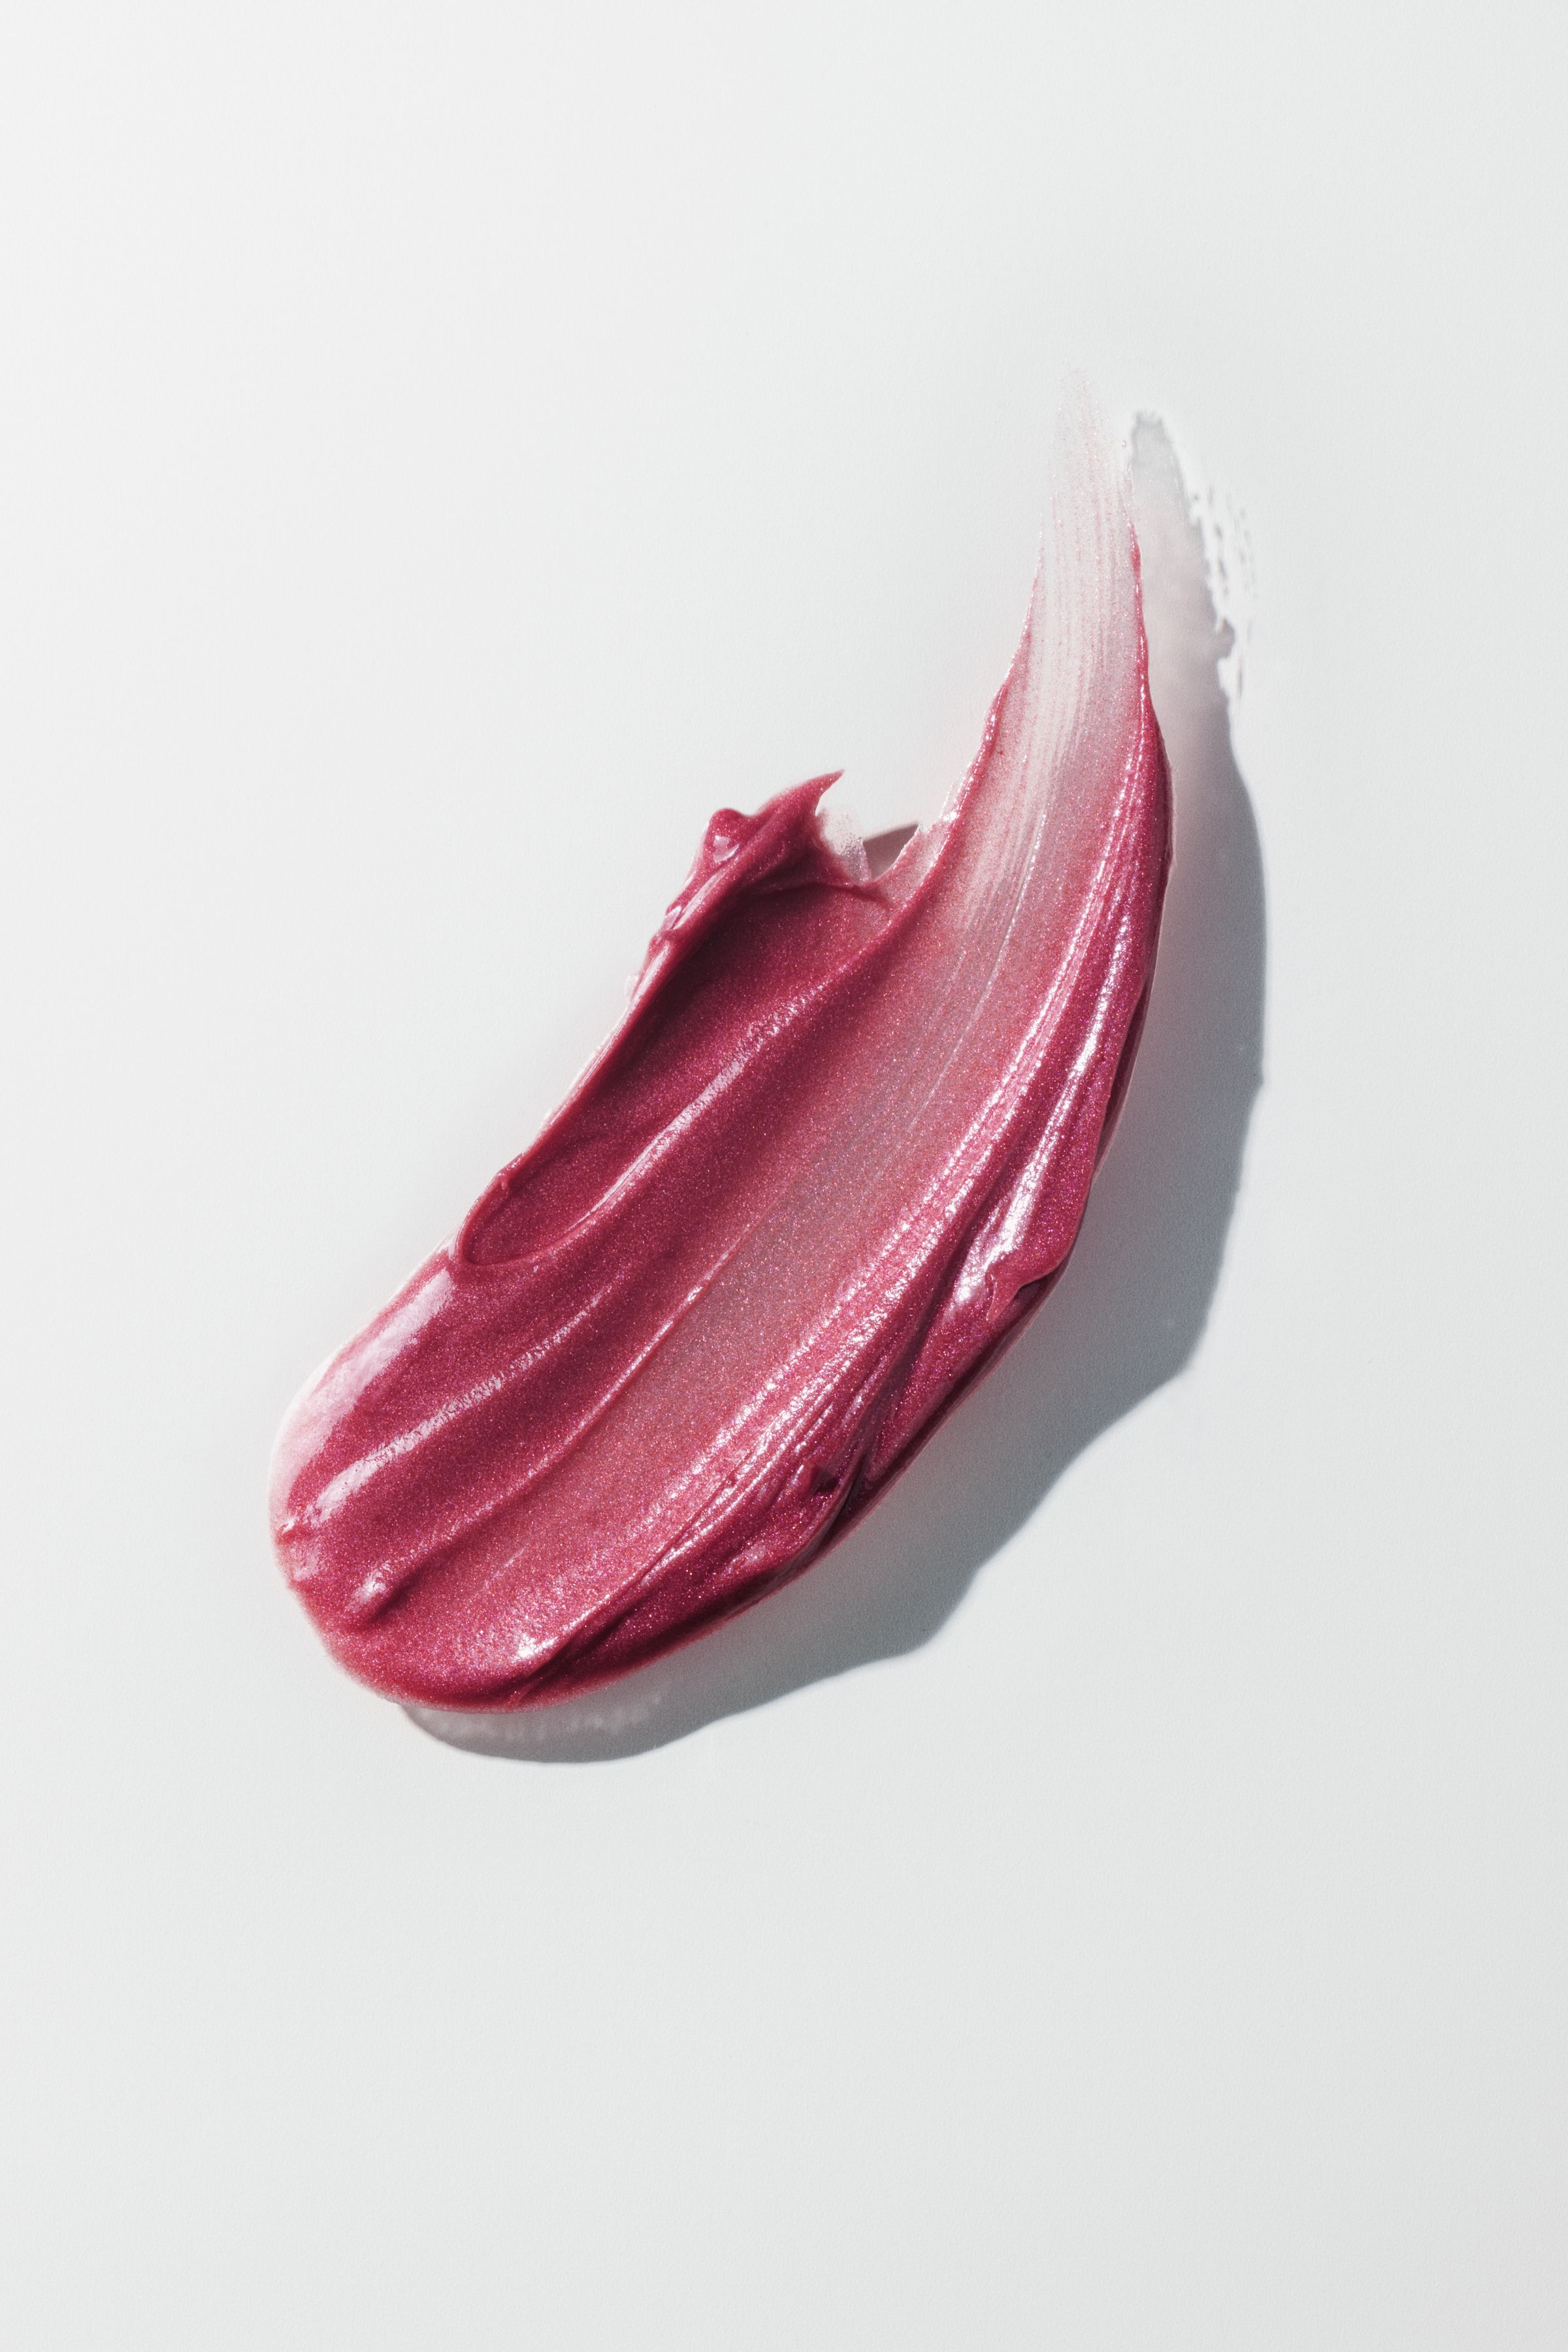 Nuori lip treat product swatch art direction